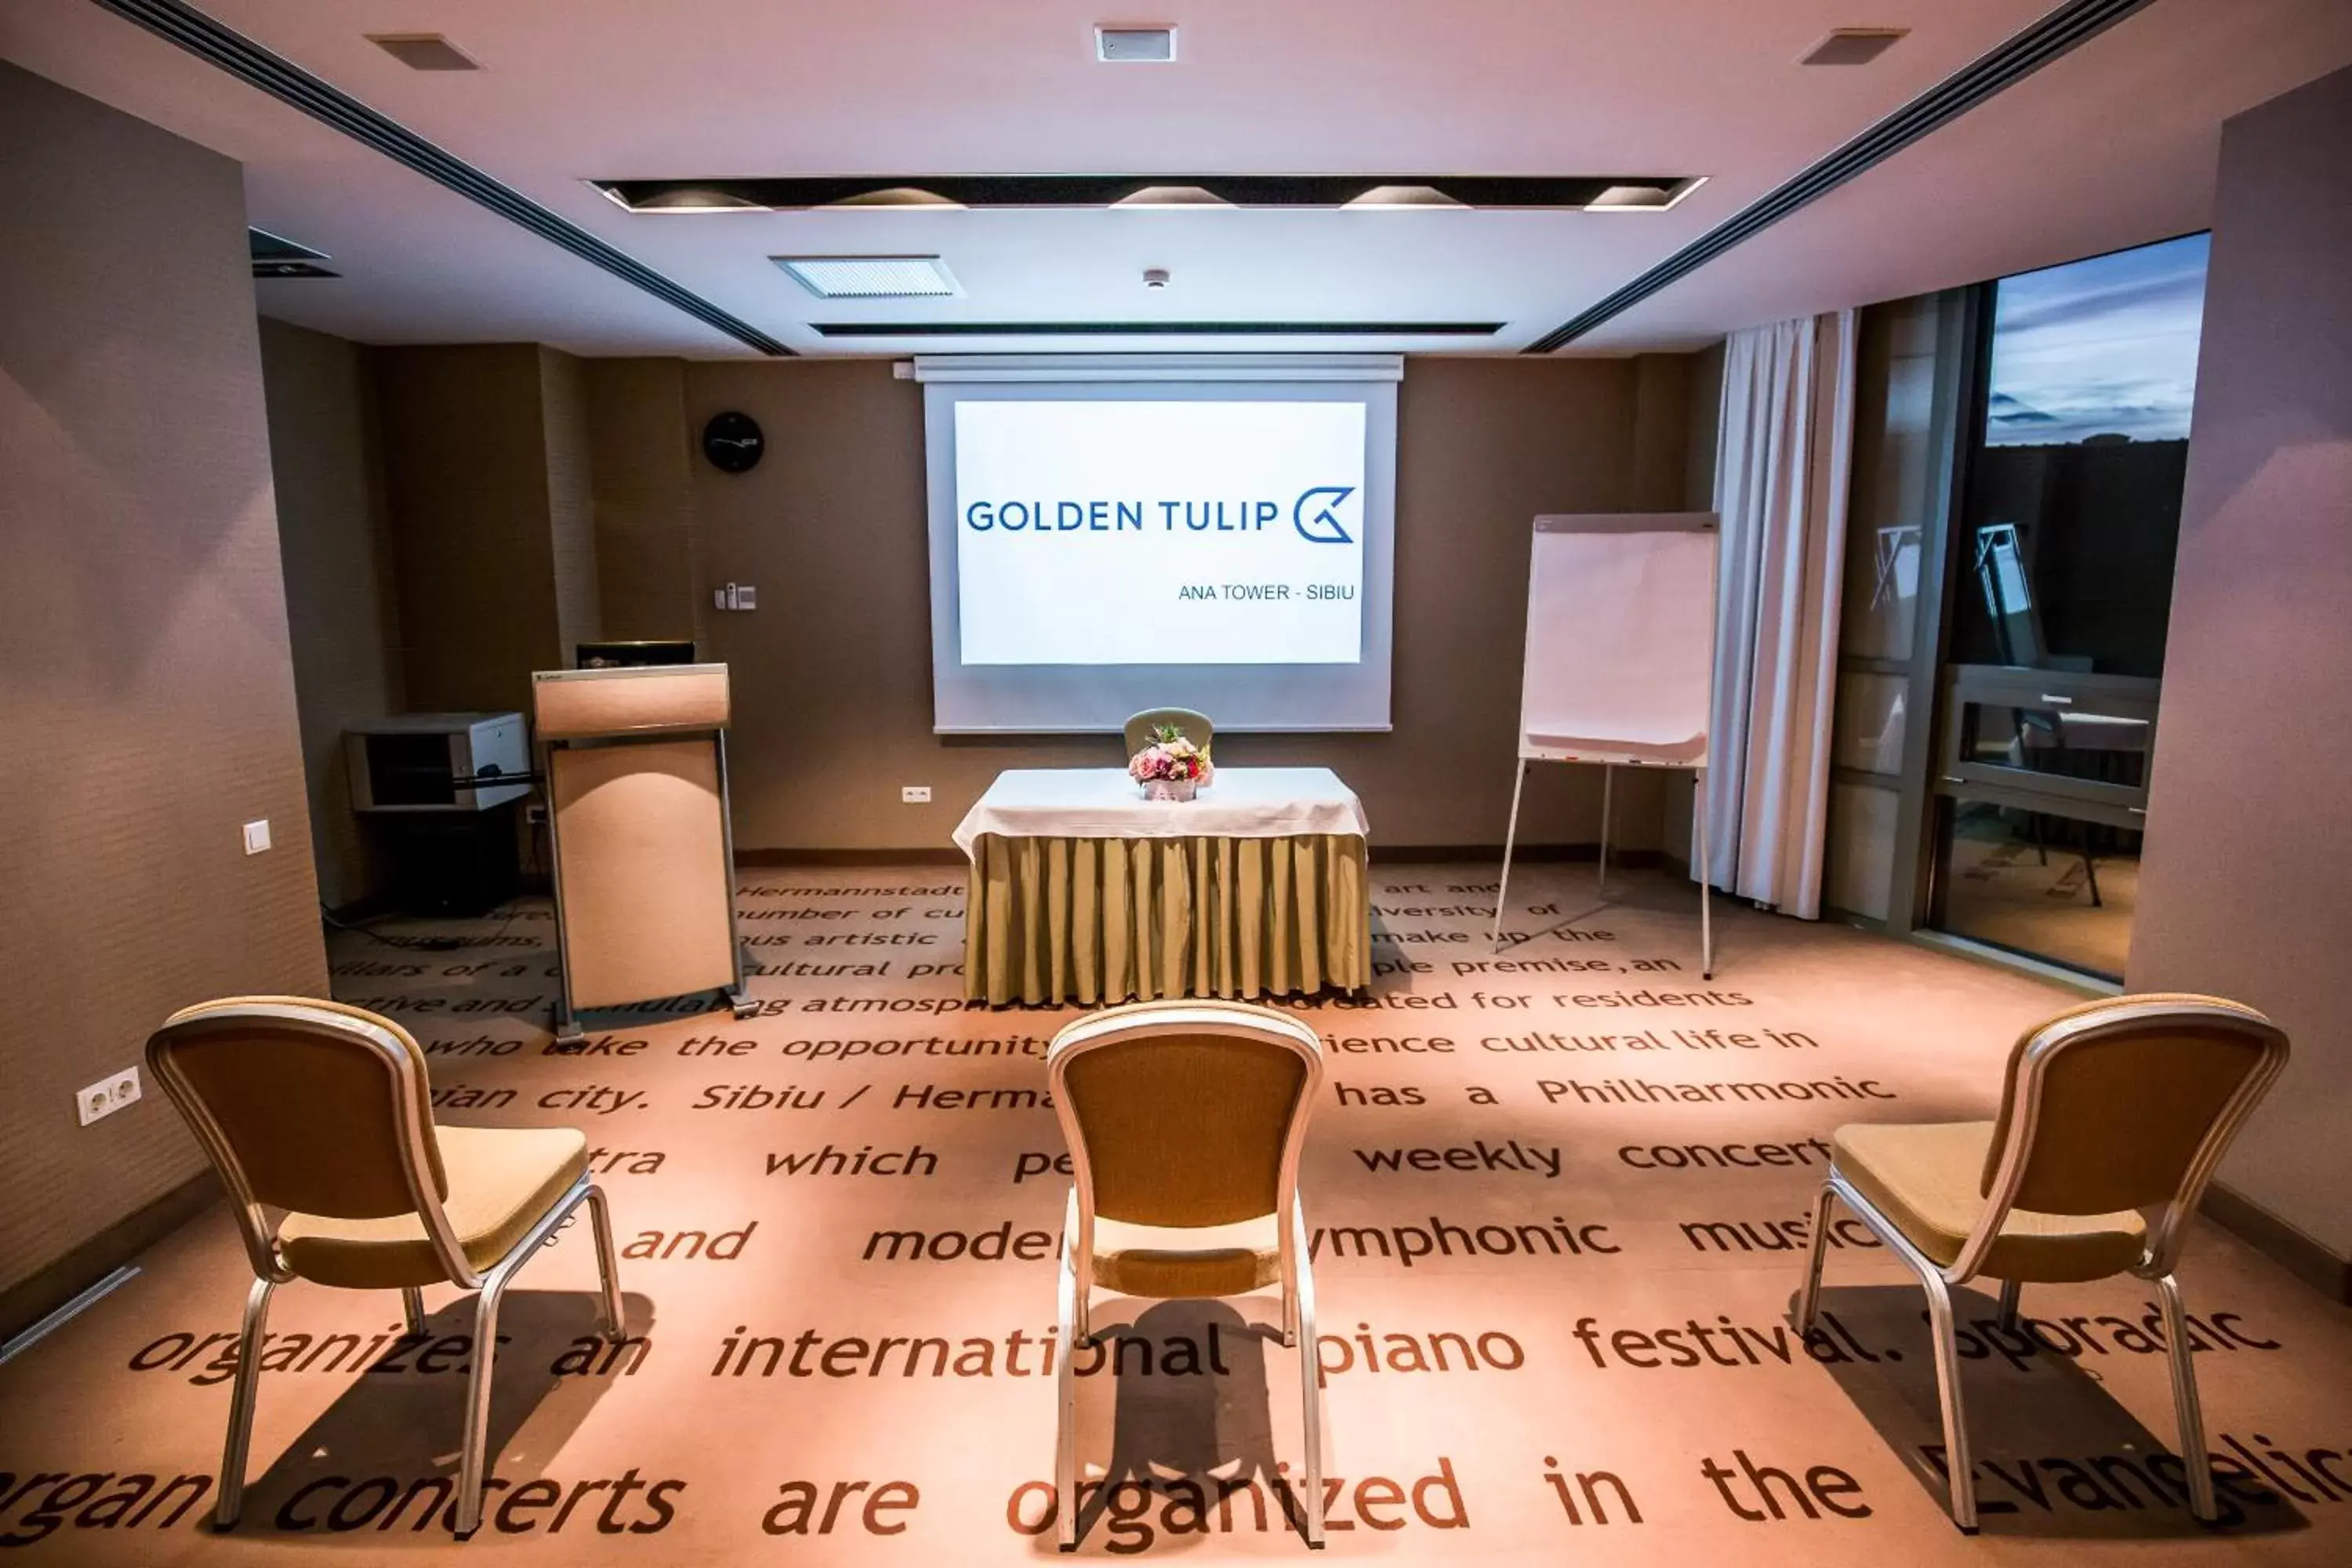 Business facilities in Hotel Golden Tulip Ana Tower Sibiu